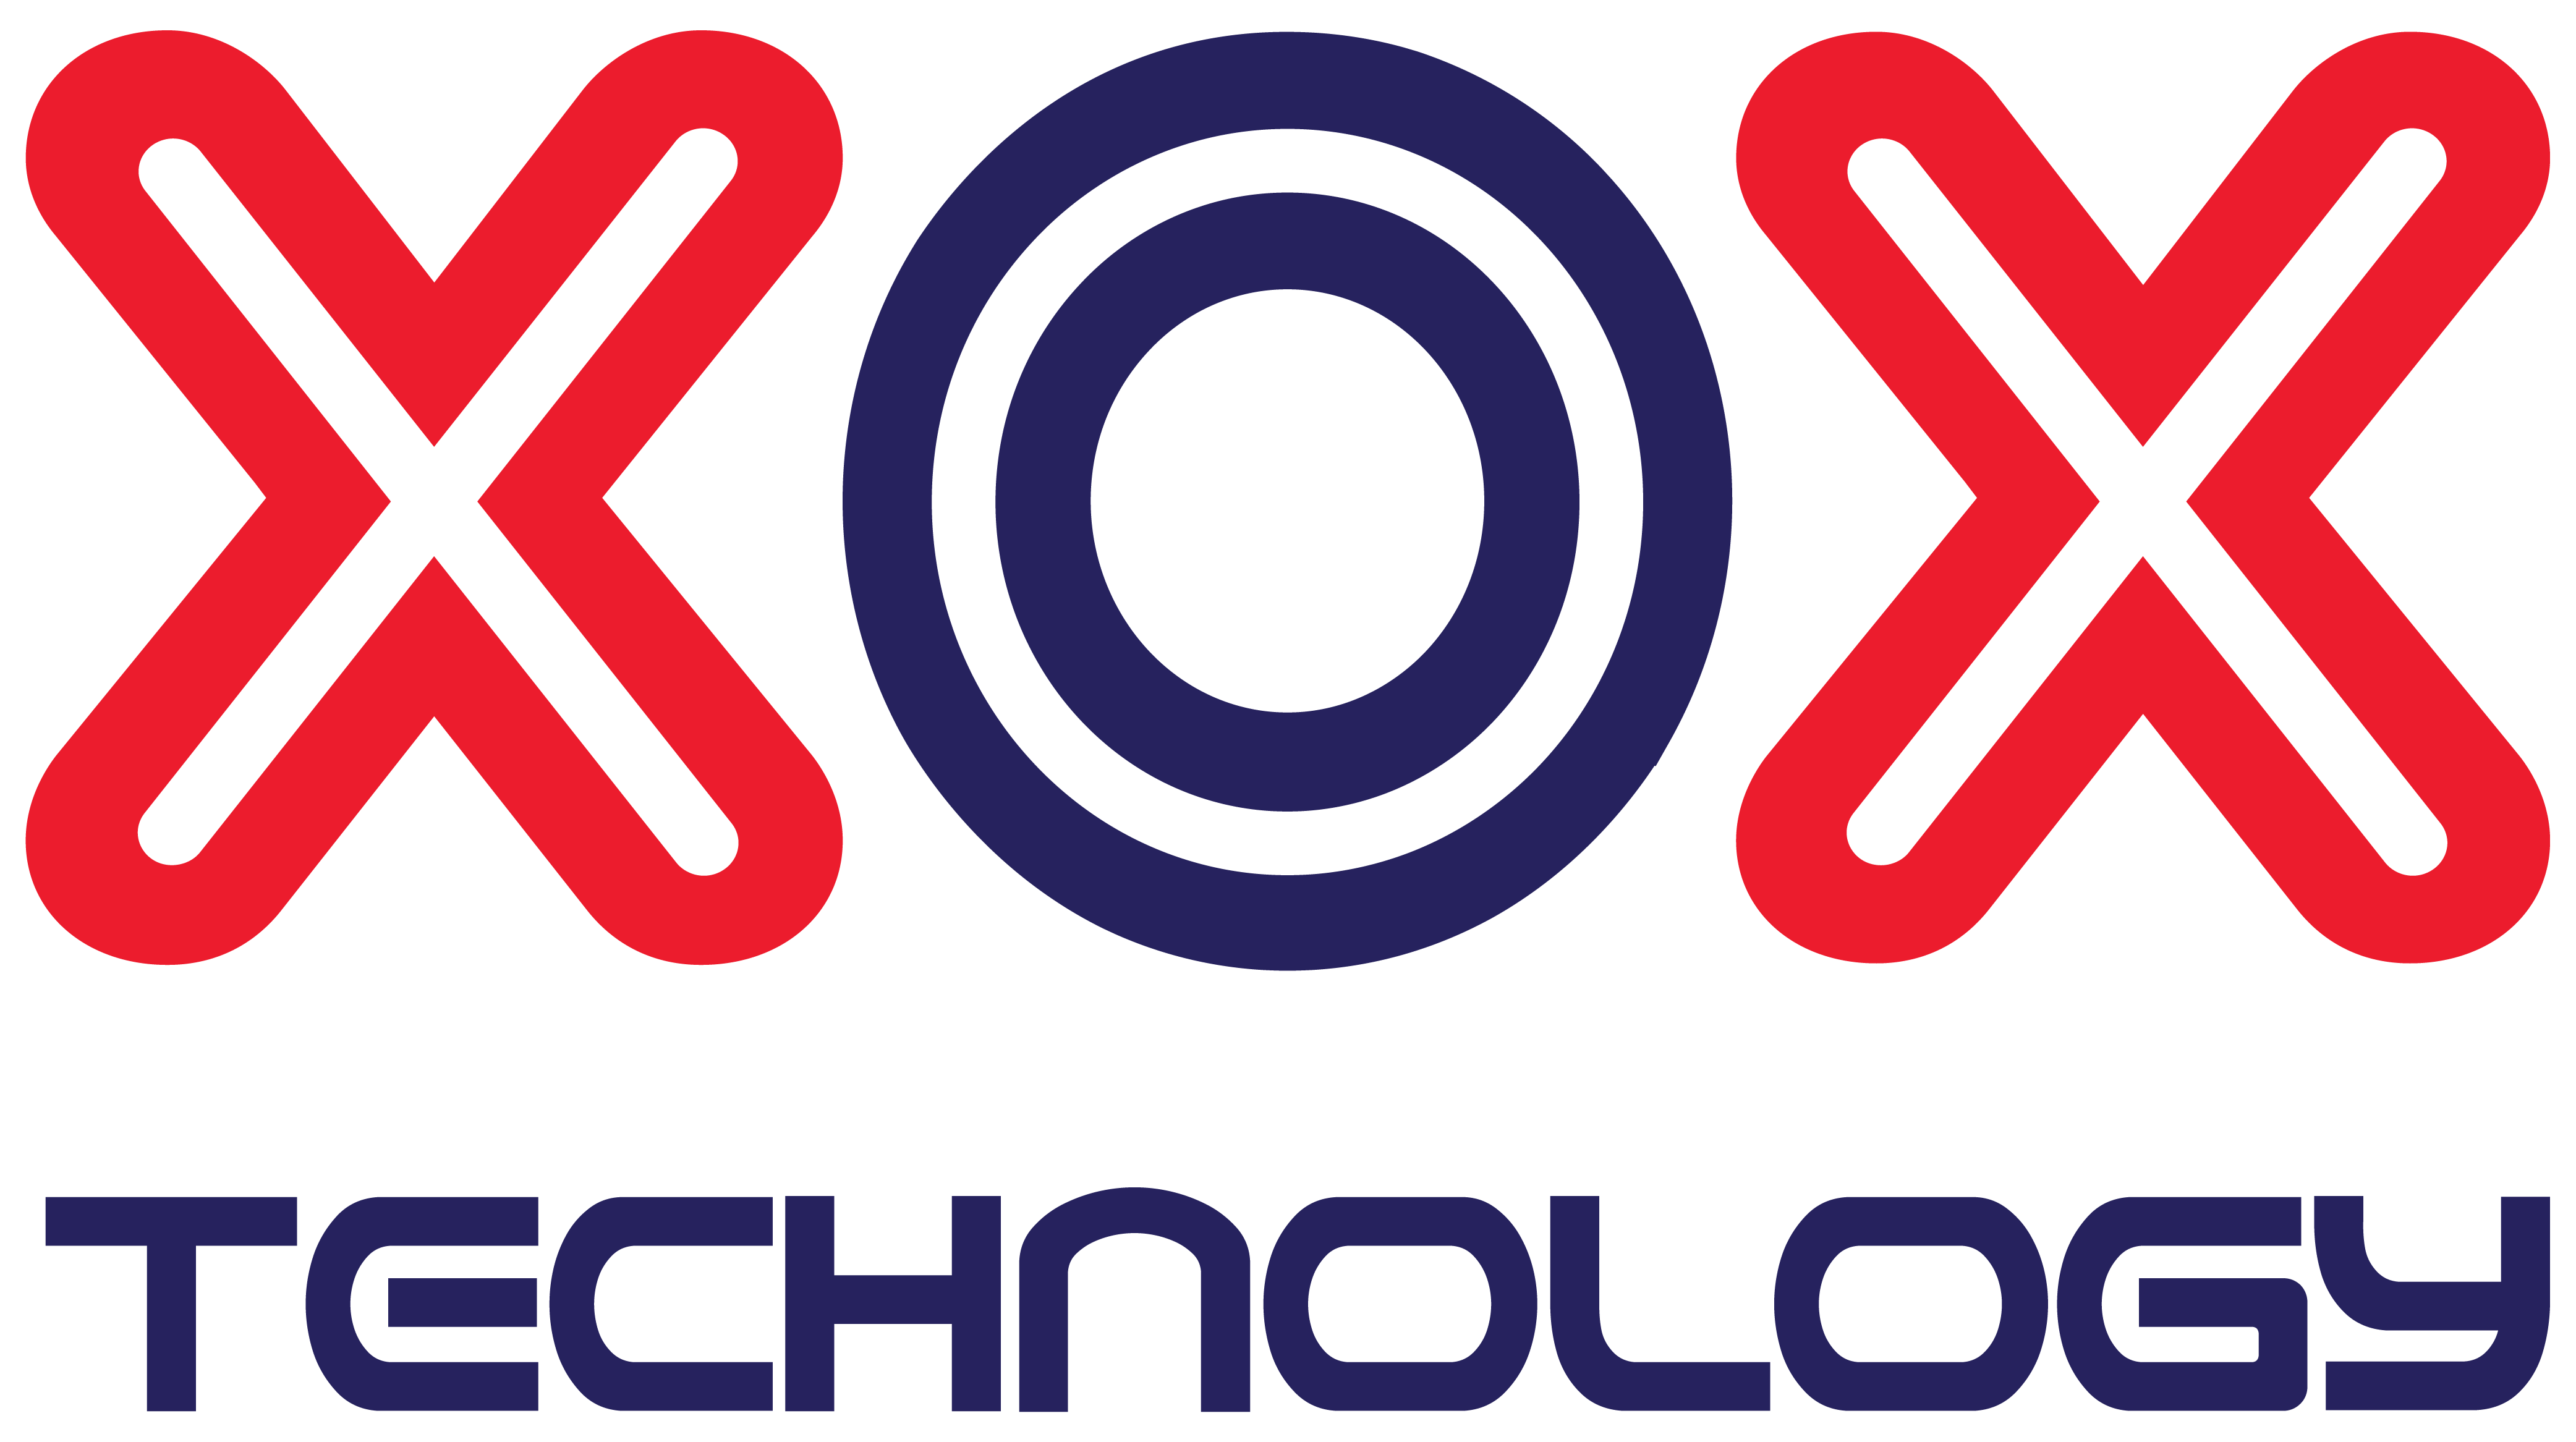 XOXTECH.COM.MY